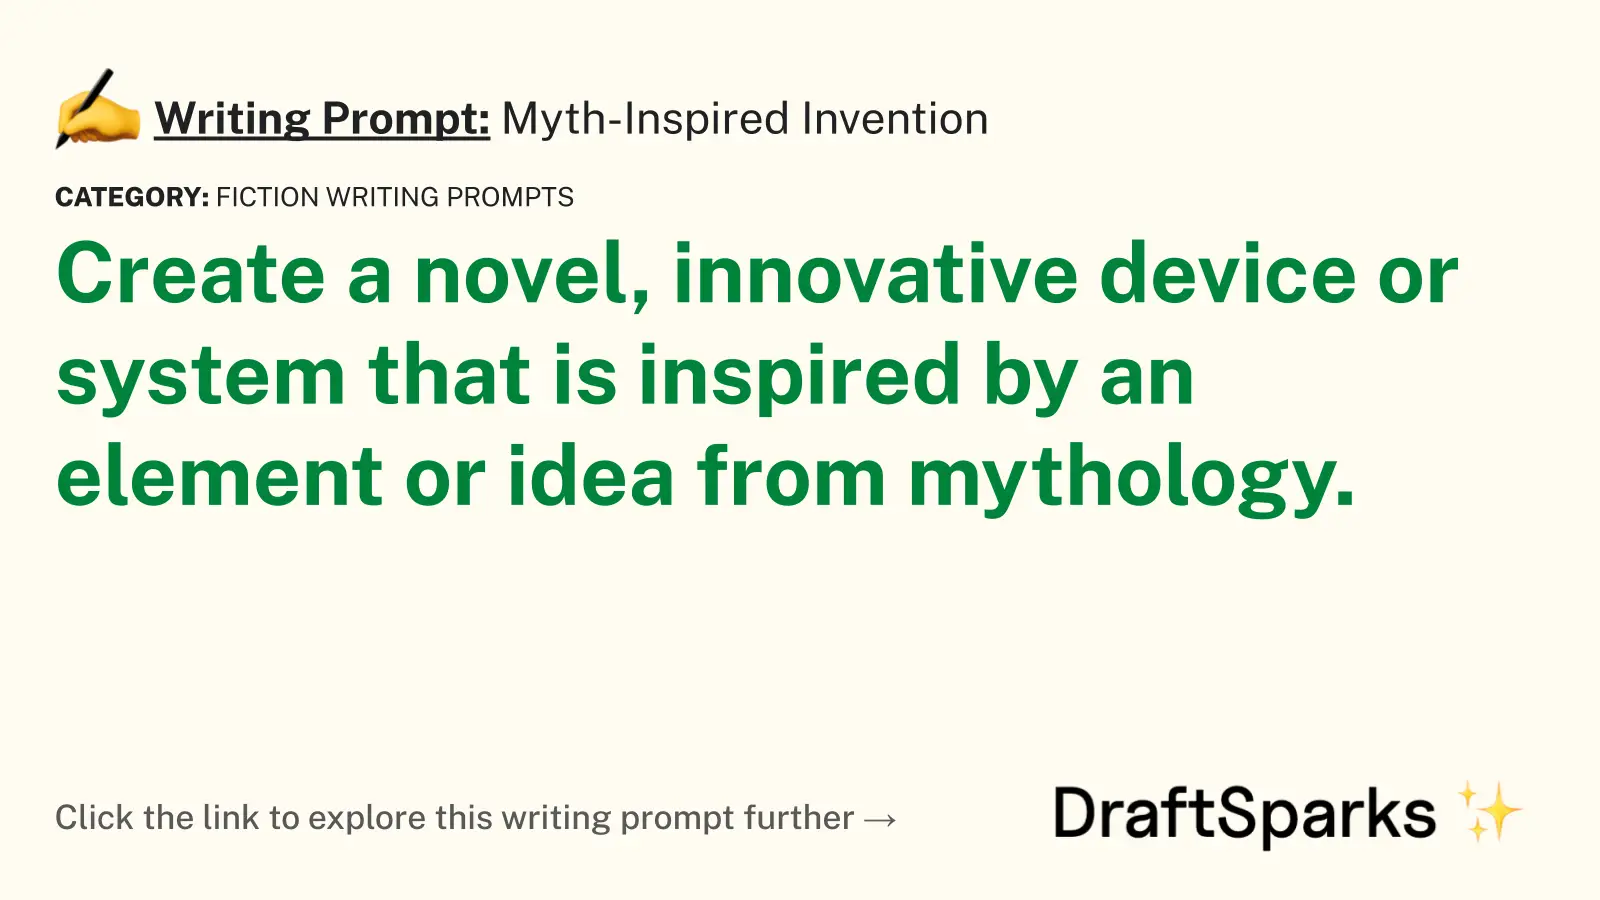 Myth-Inspired Invention